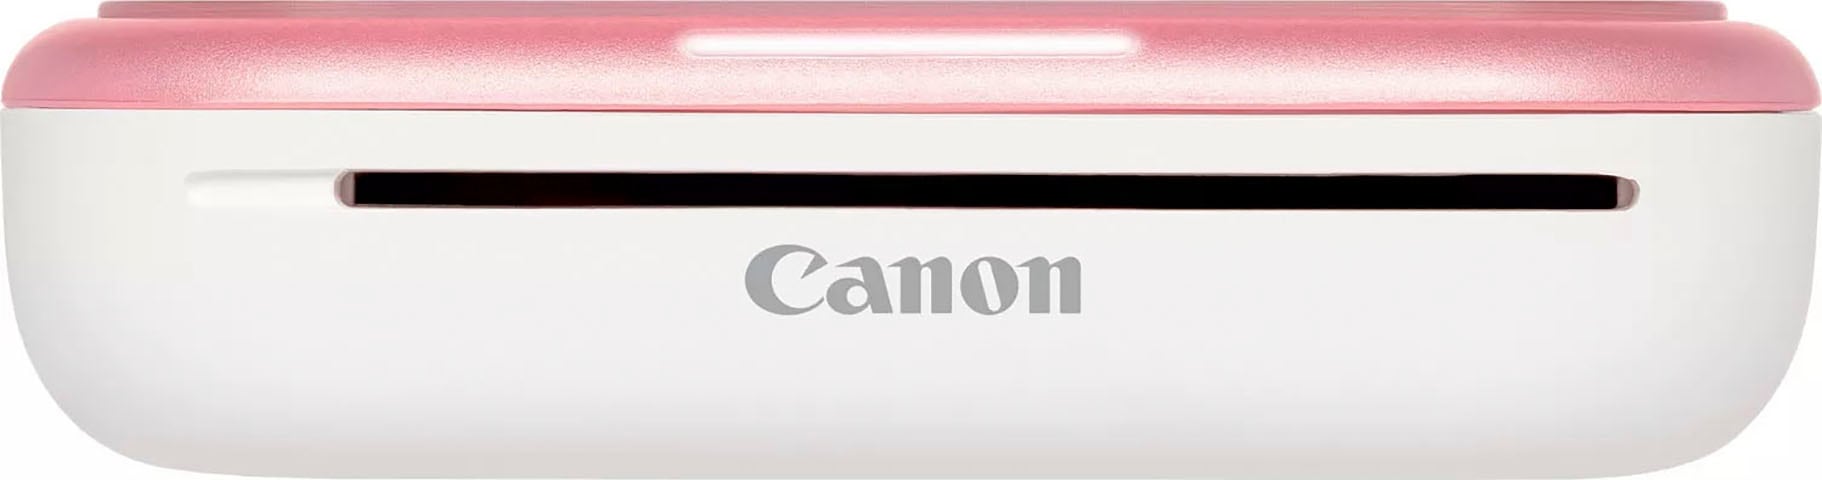 Canon Fotodrucker »Zoemini 2«